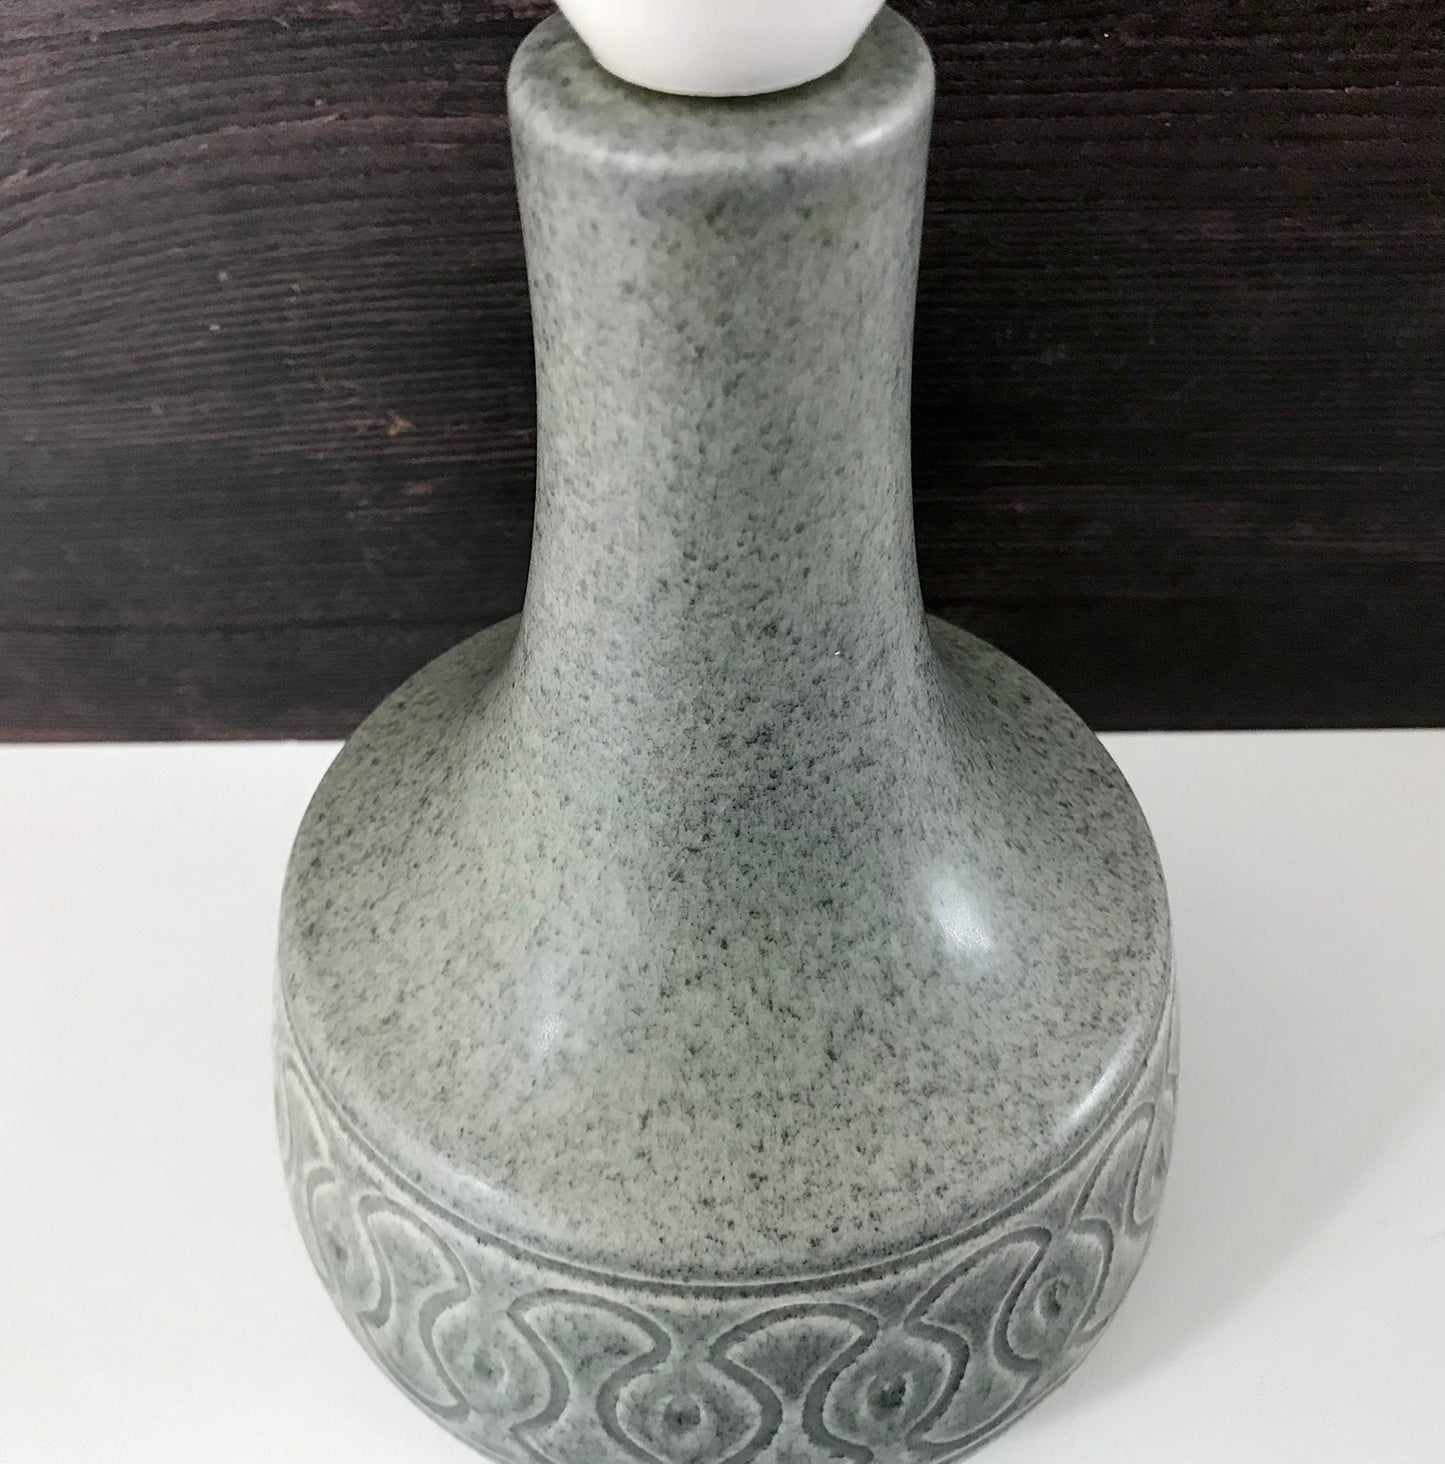 Soholm Pottery Denim Grey Danish Ceramic Table Lamp Light 2113